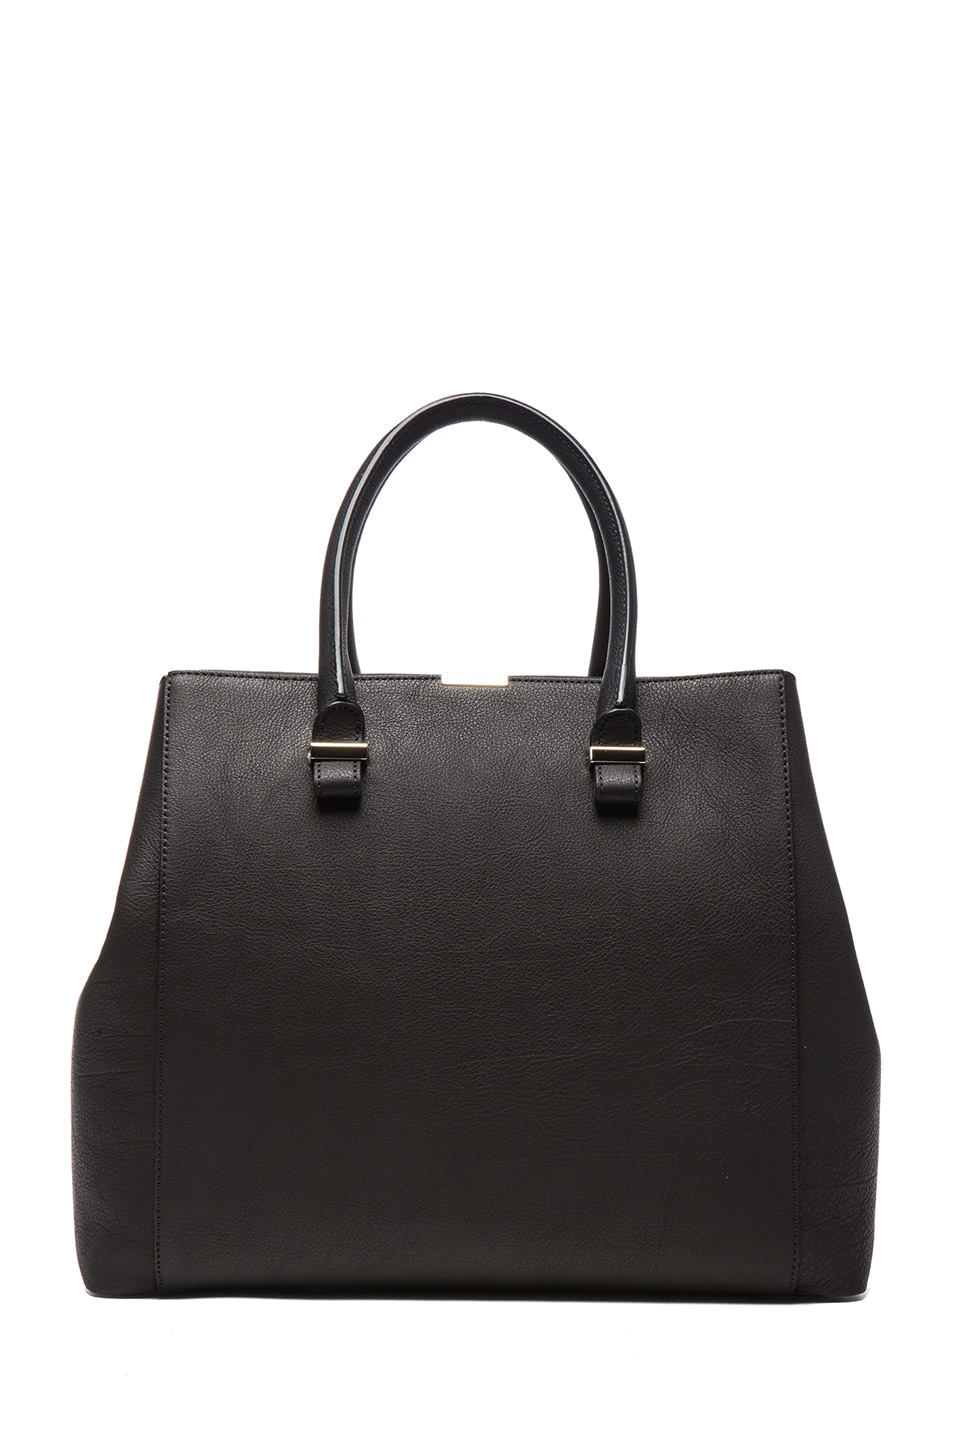 Victoria Beckham Liberty Bag in Black & Powder | FWRD